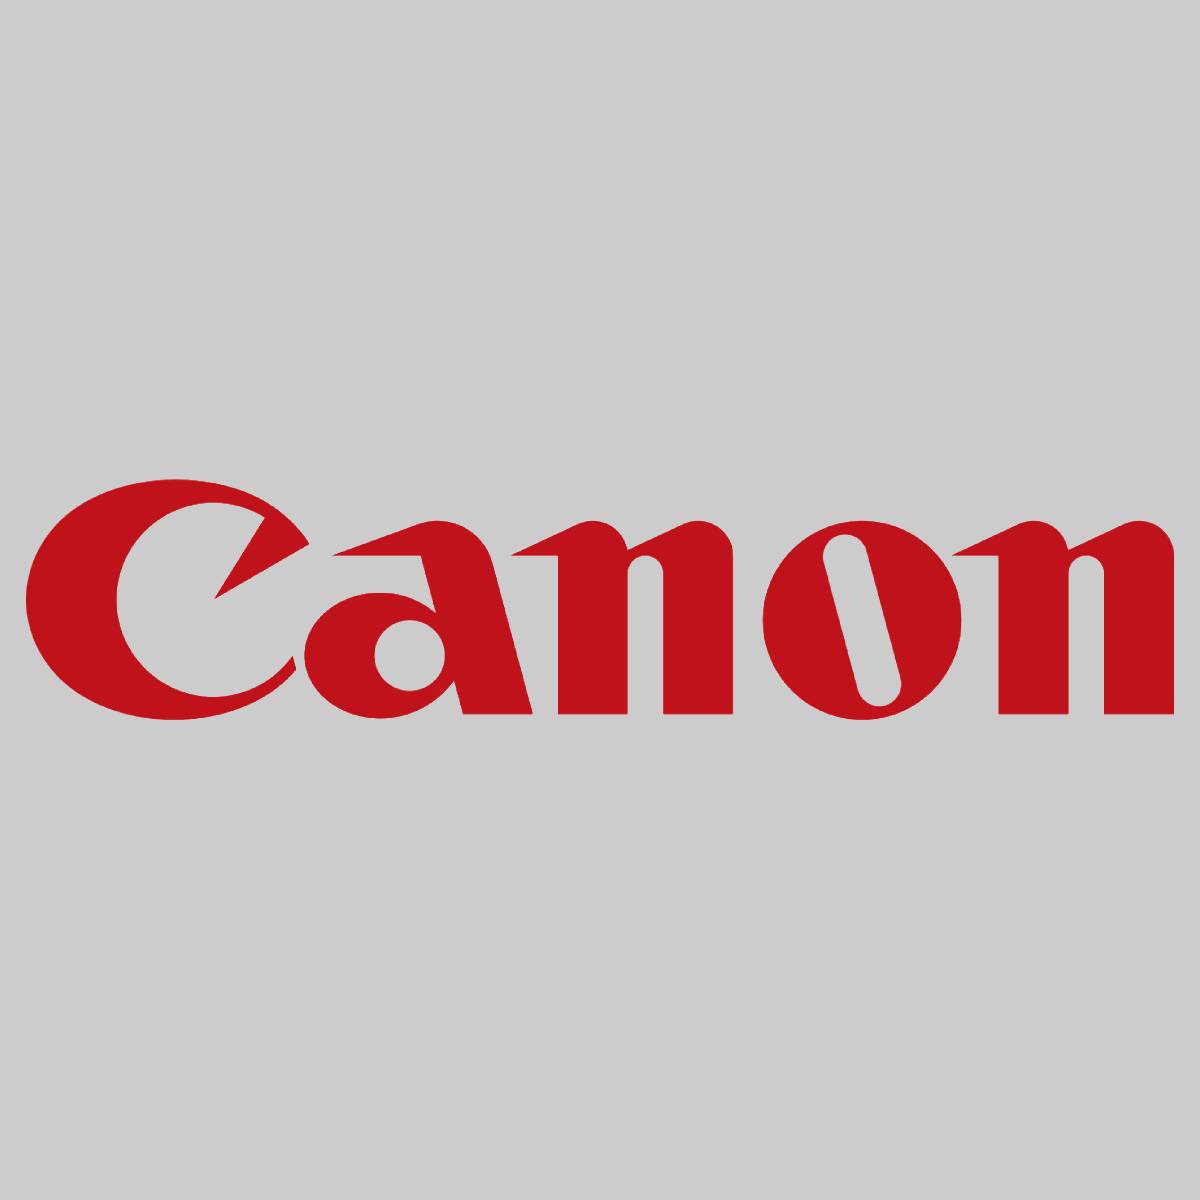 "Original Canon C-EXV 19 Toner Magenta 0399B002 pour imagePRESS C 1 NEW OVP